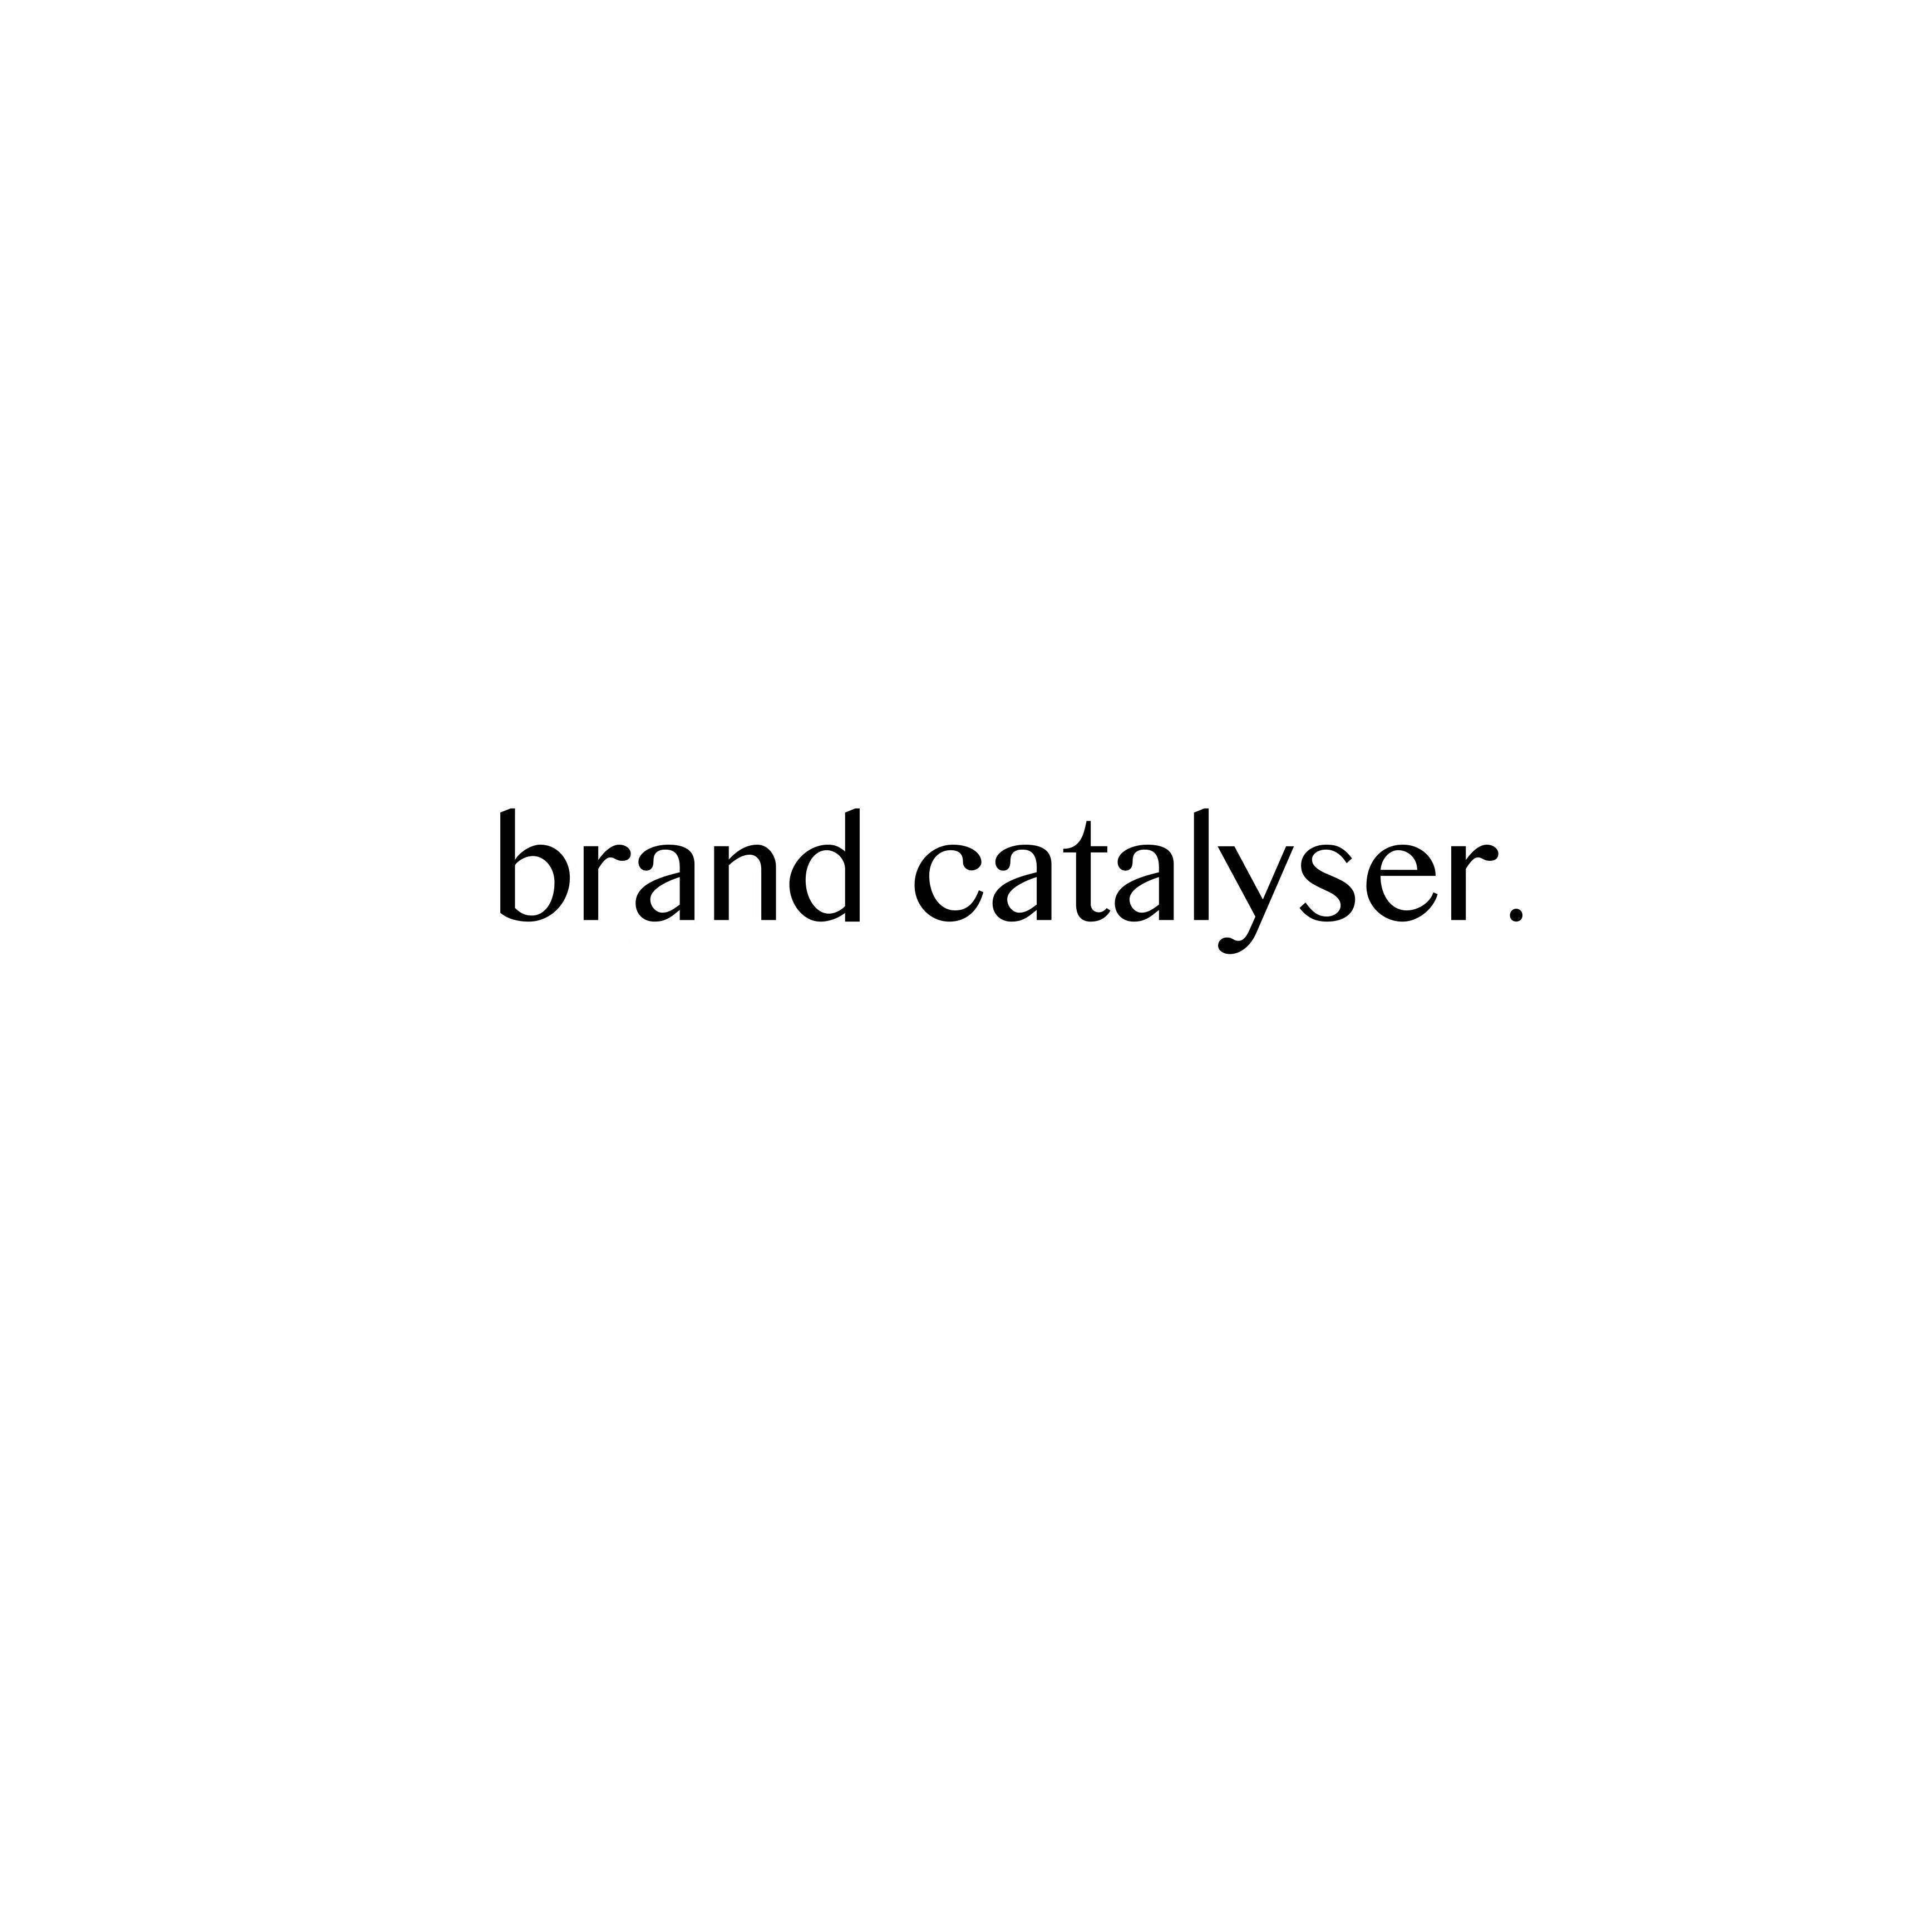 brand catalyser